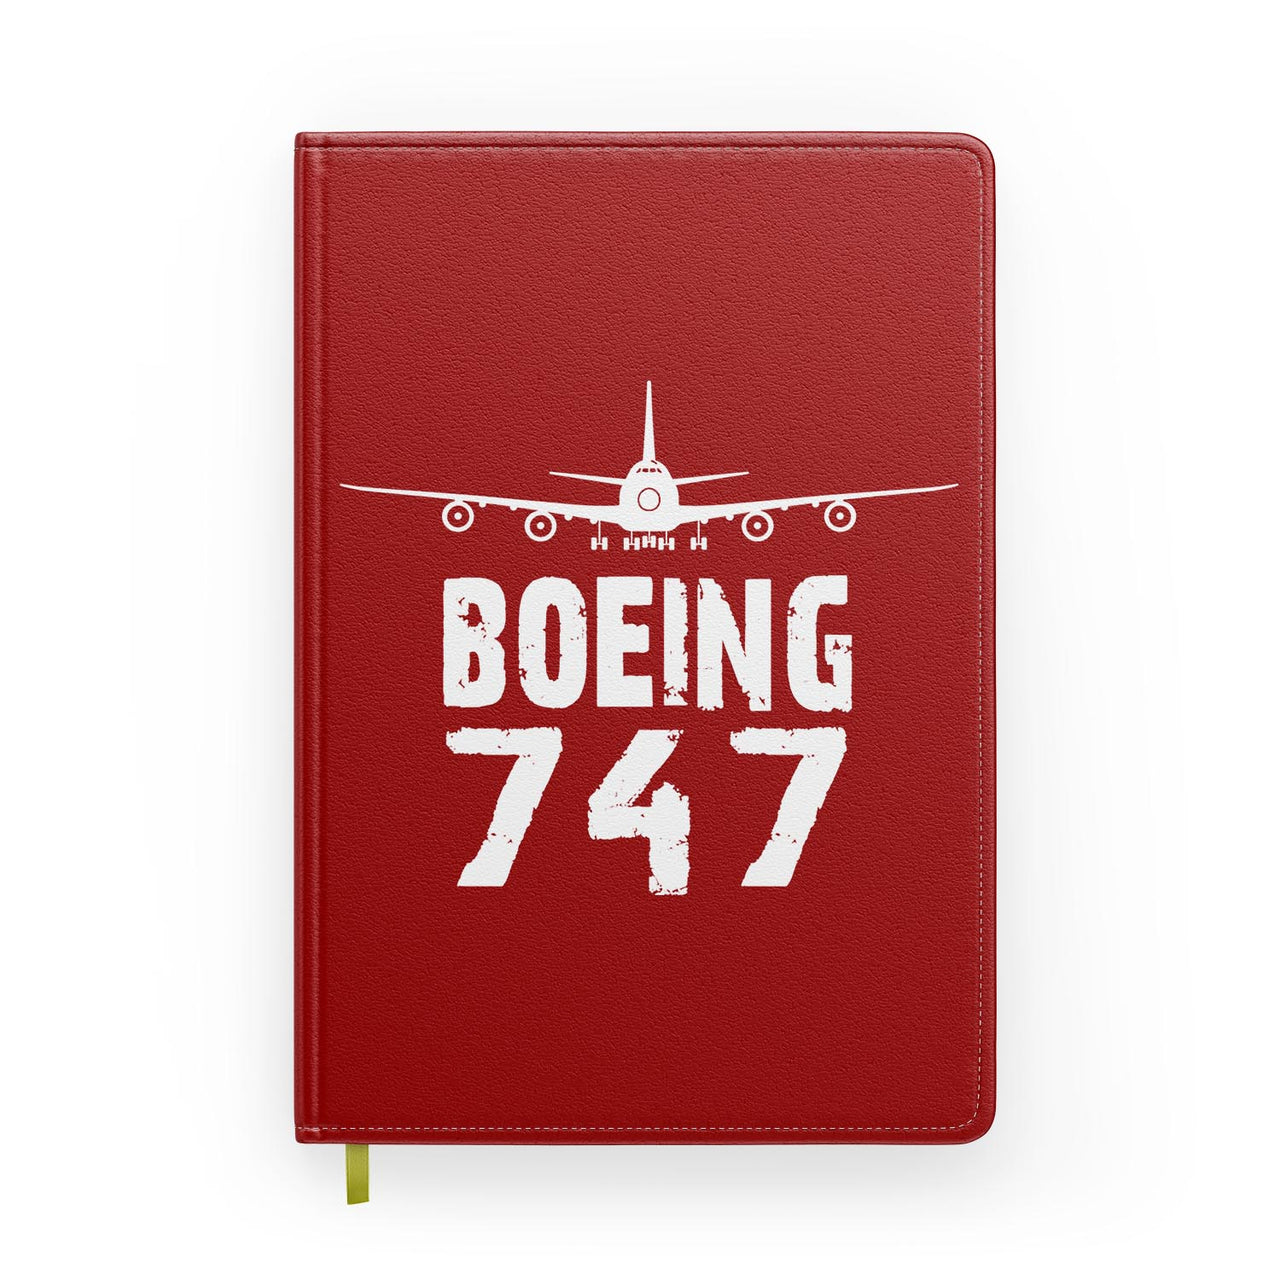 Boeing 747 & Plane Designed Notebooks